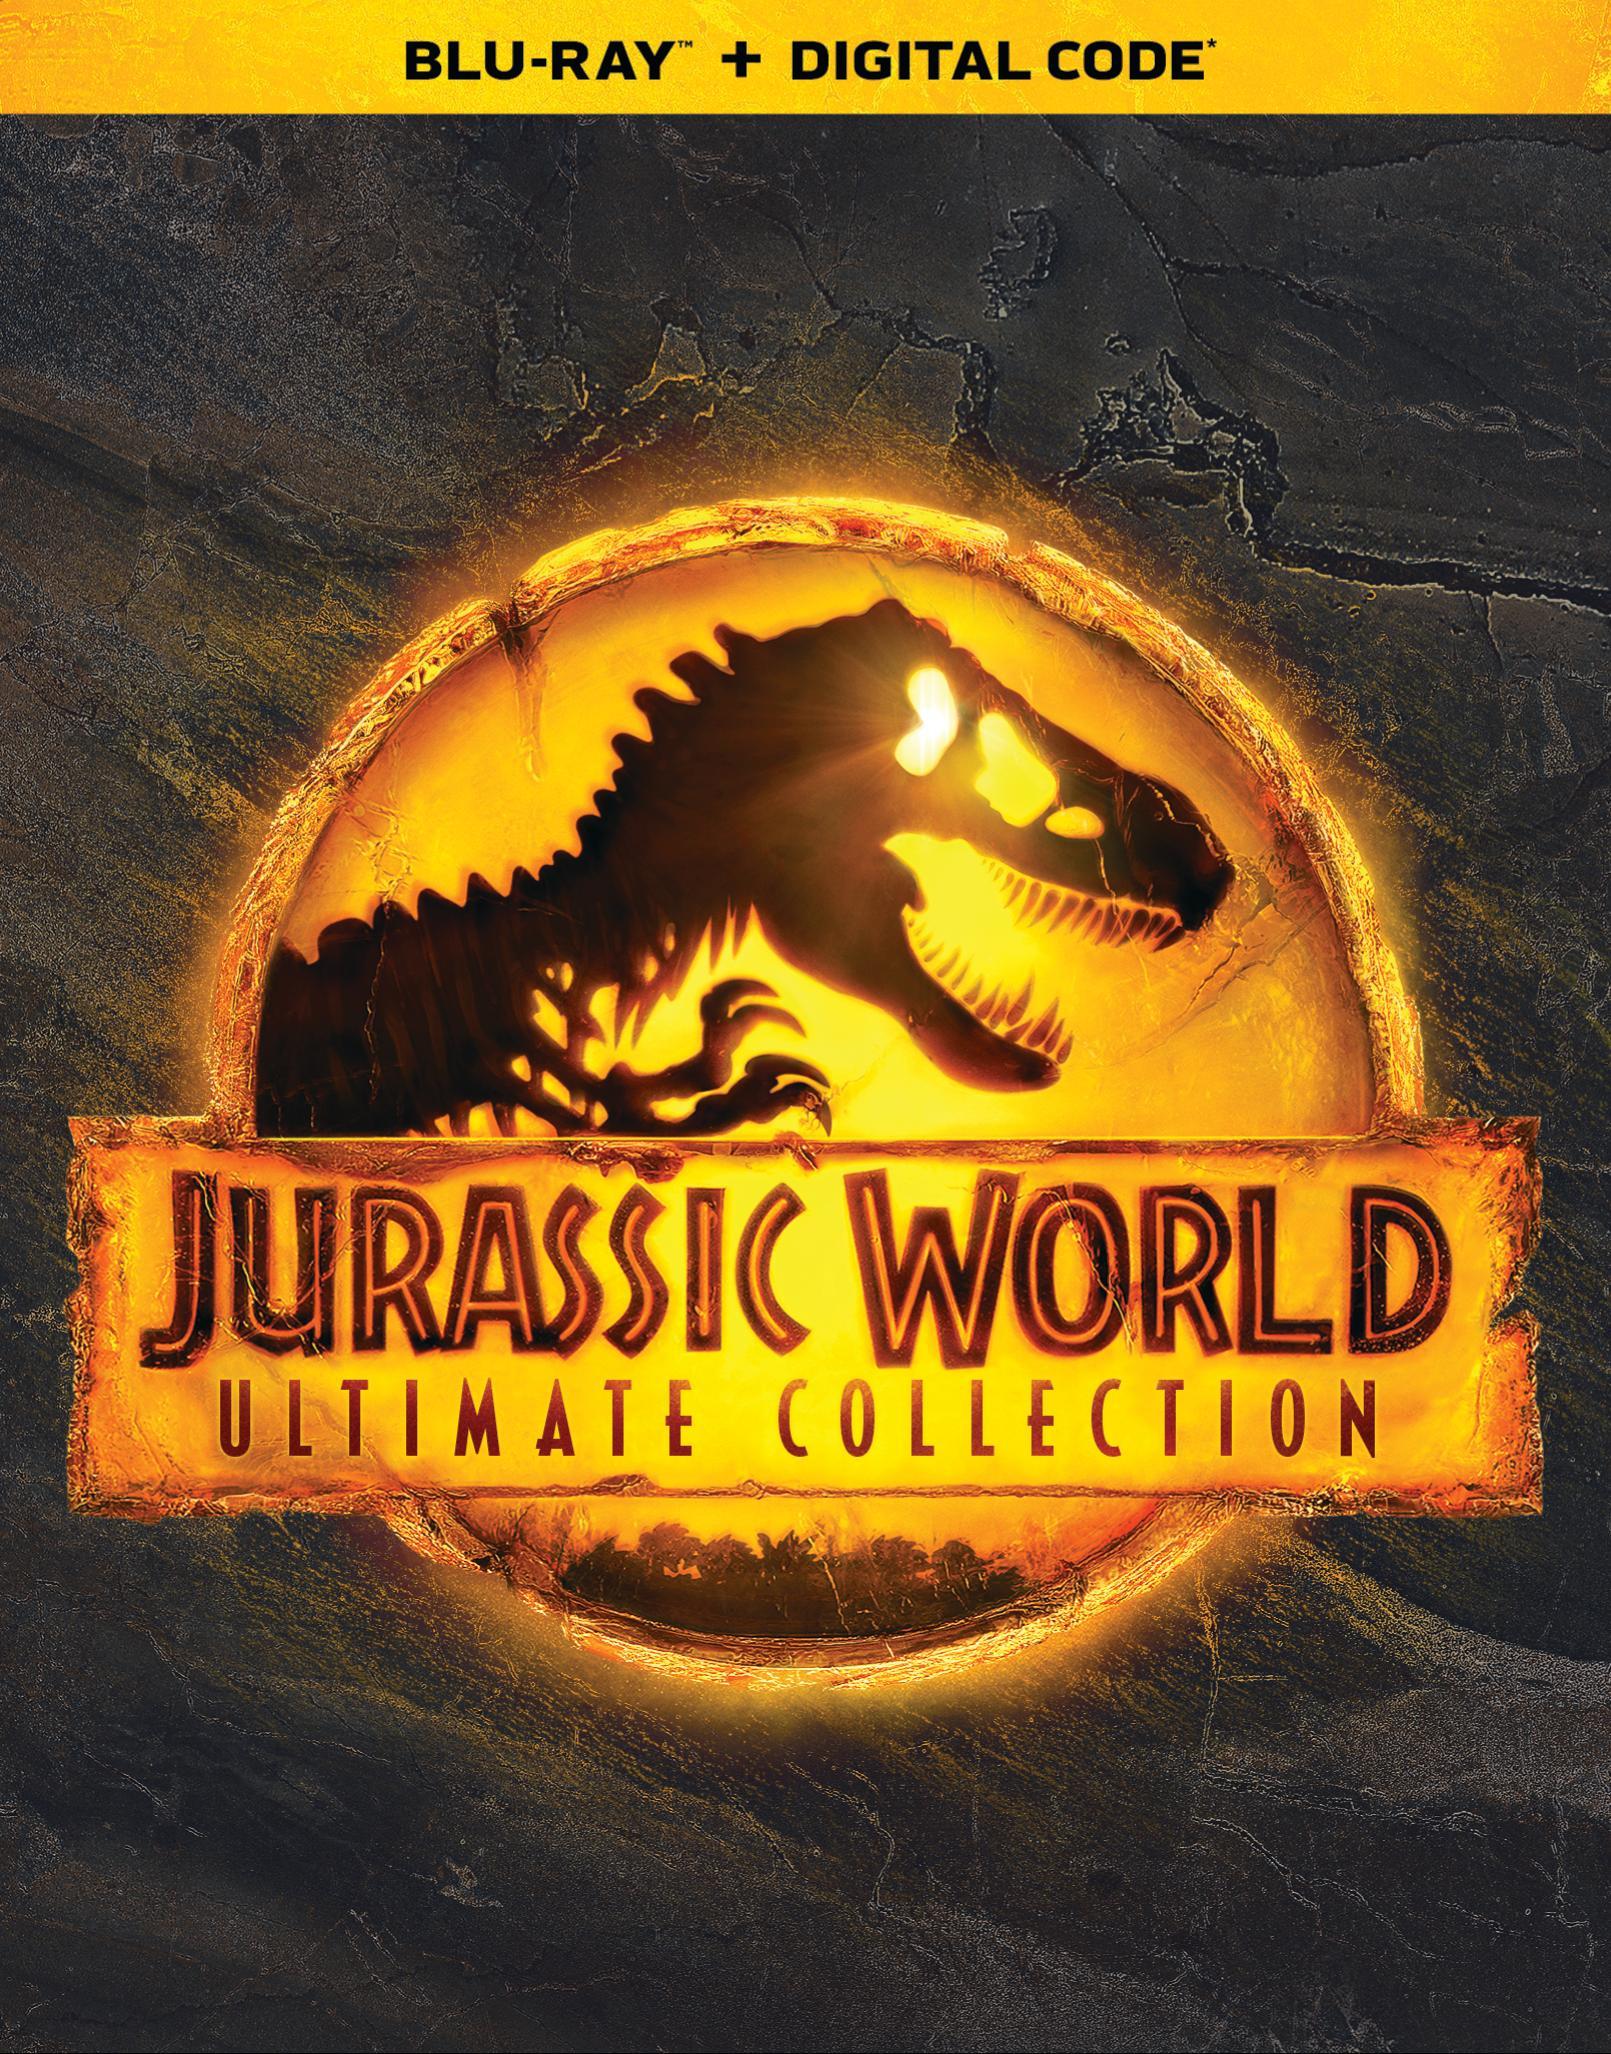 Jurassic World Ultimate Collection - Blu-ray + Digital (Box Set) - Blu-ray   - Adventure Movies On 4K Ultra HD Blu-ray - Movies On GRUV